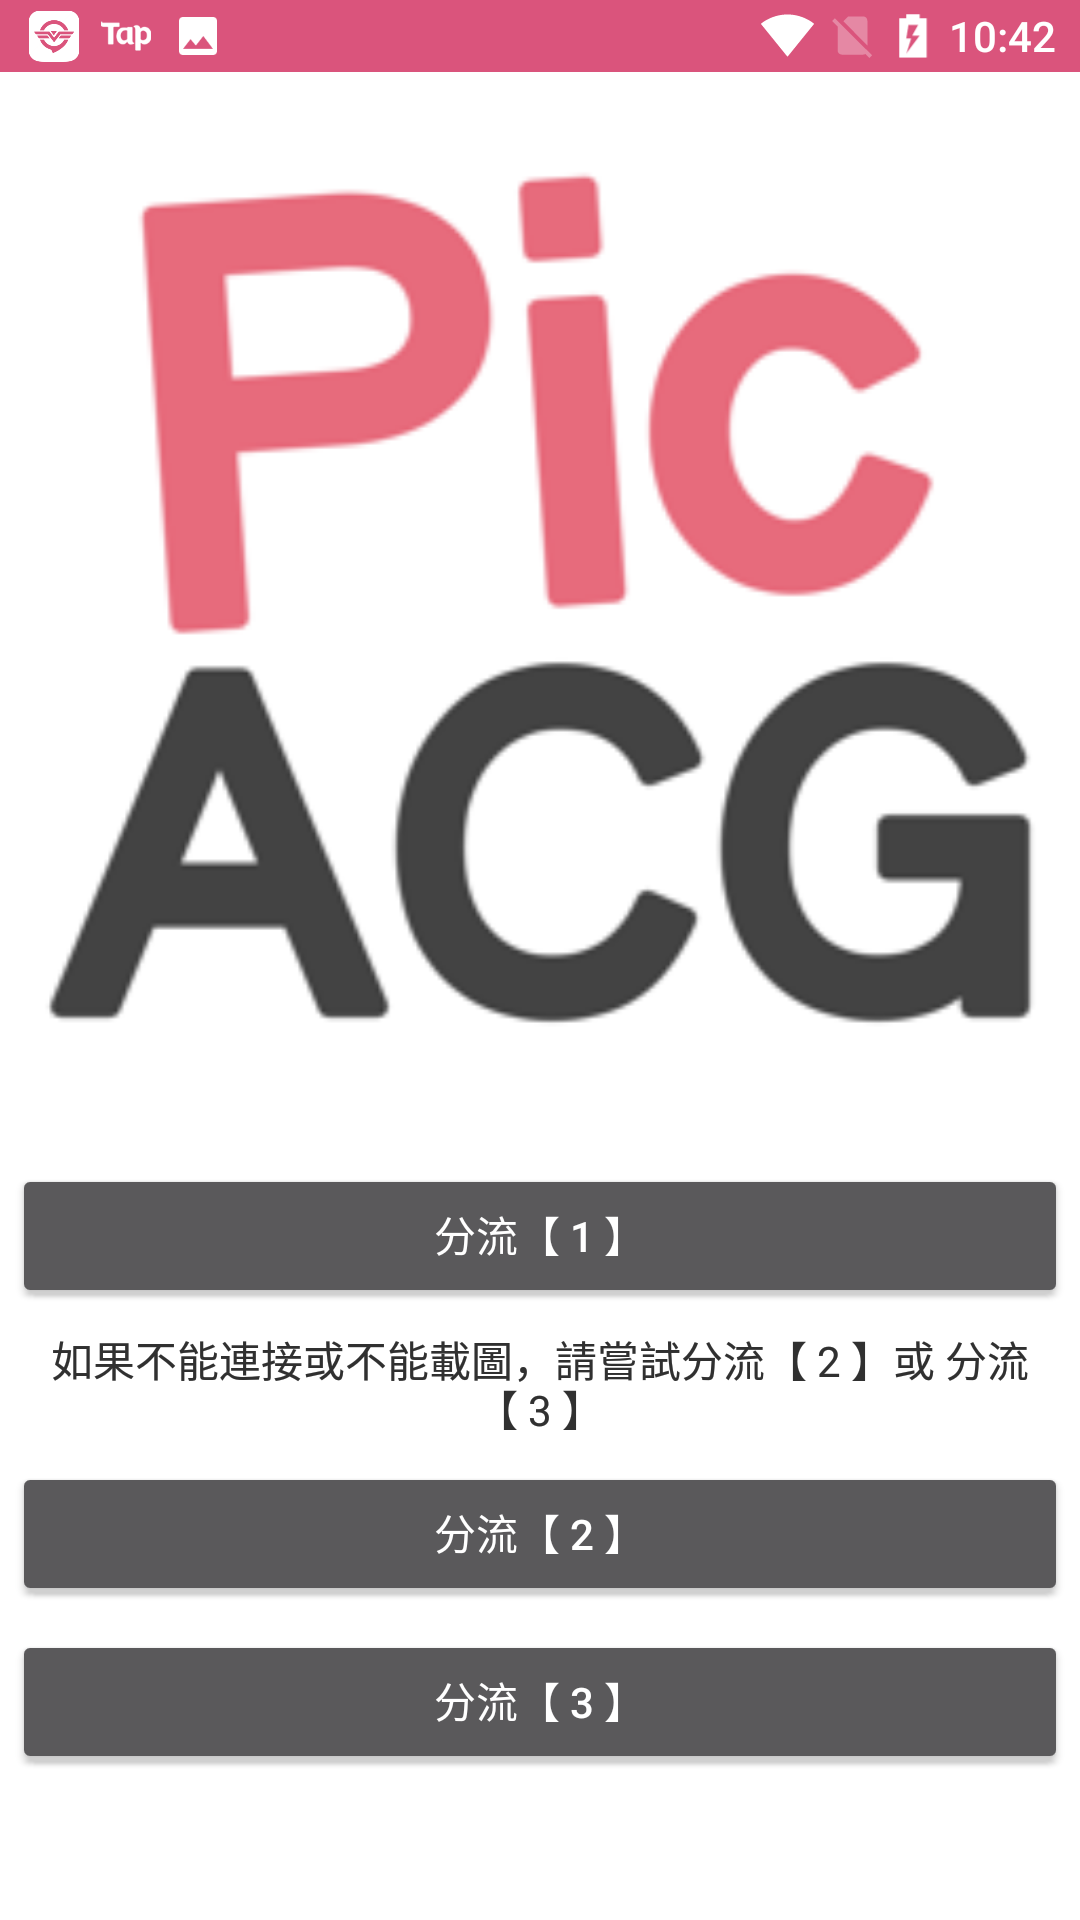 PICACG安卓正版 V1.08